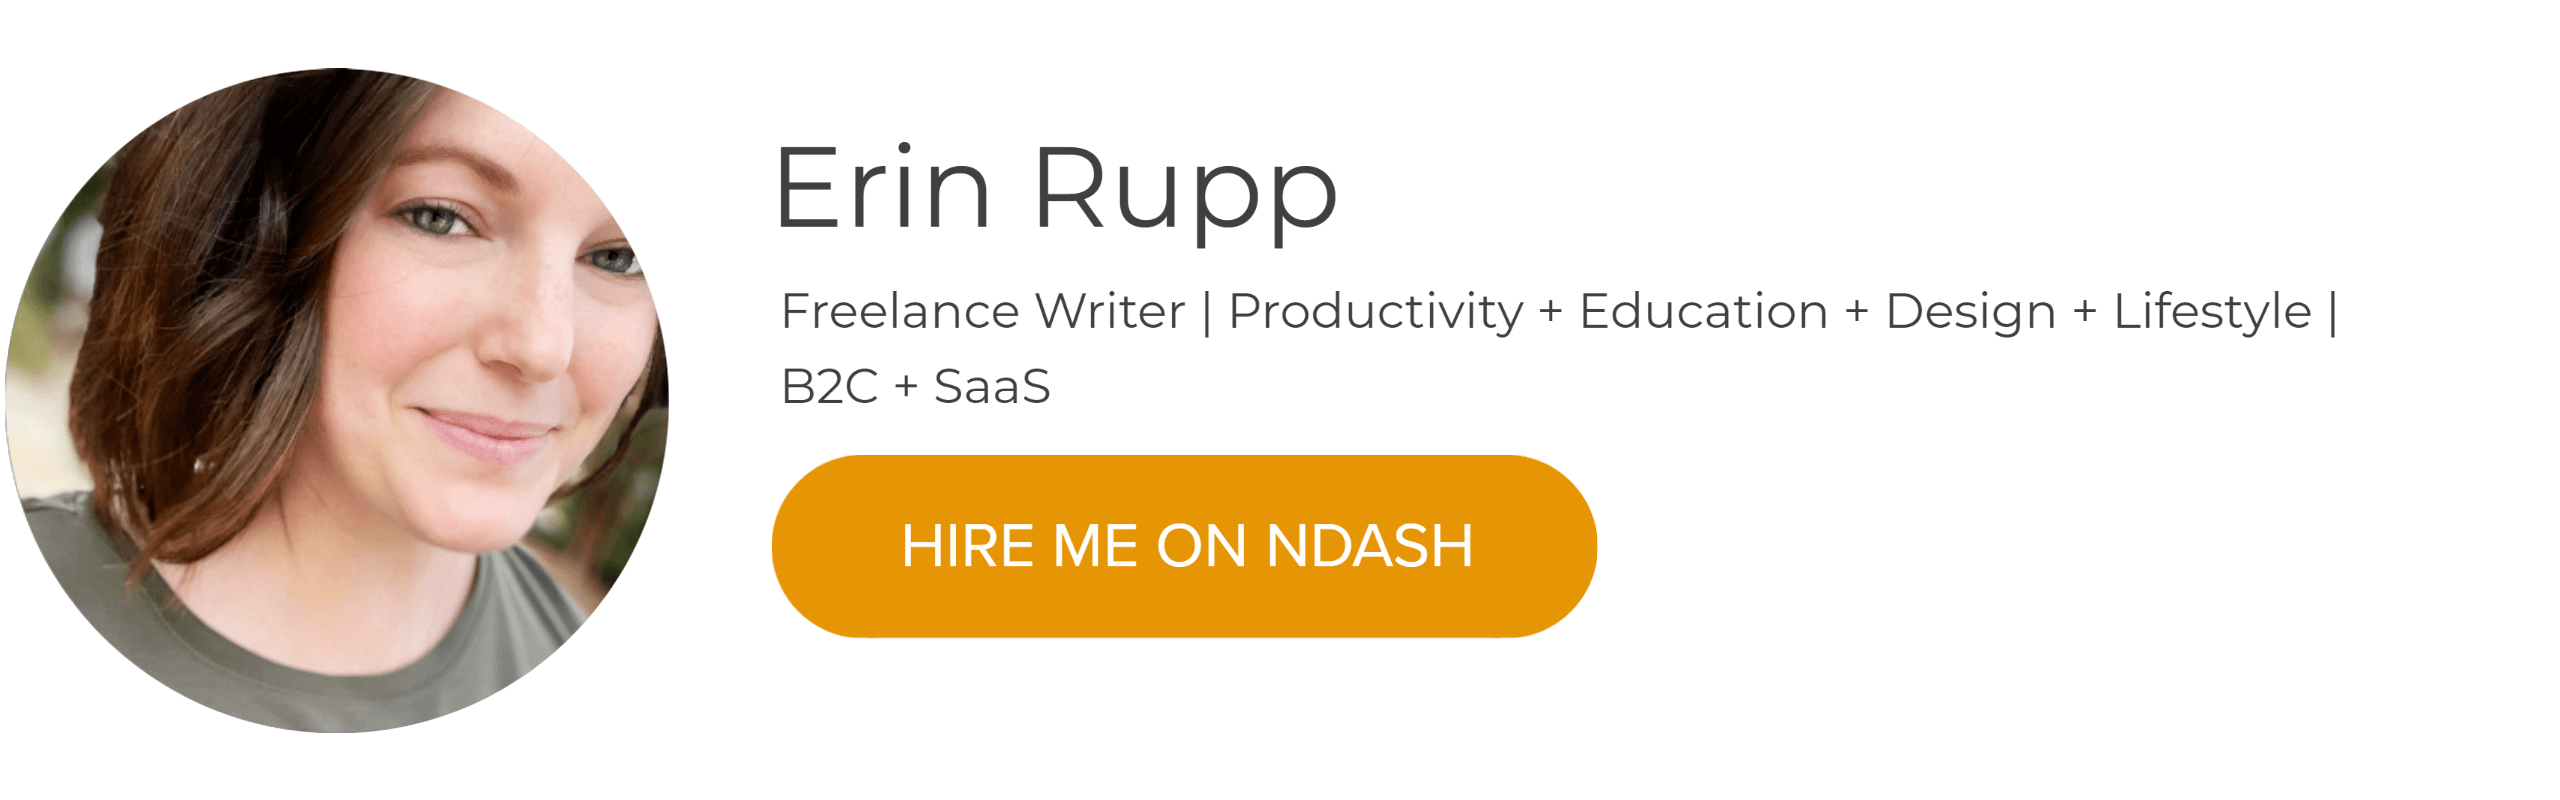 Erin Rupp: Freelance Writer